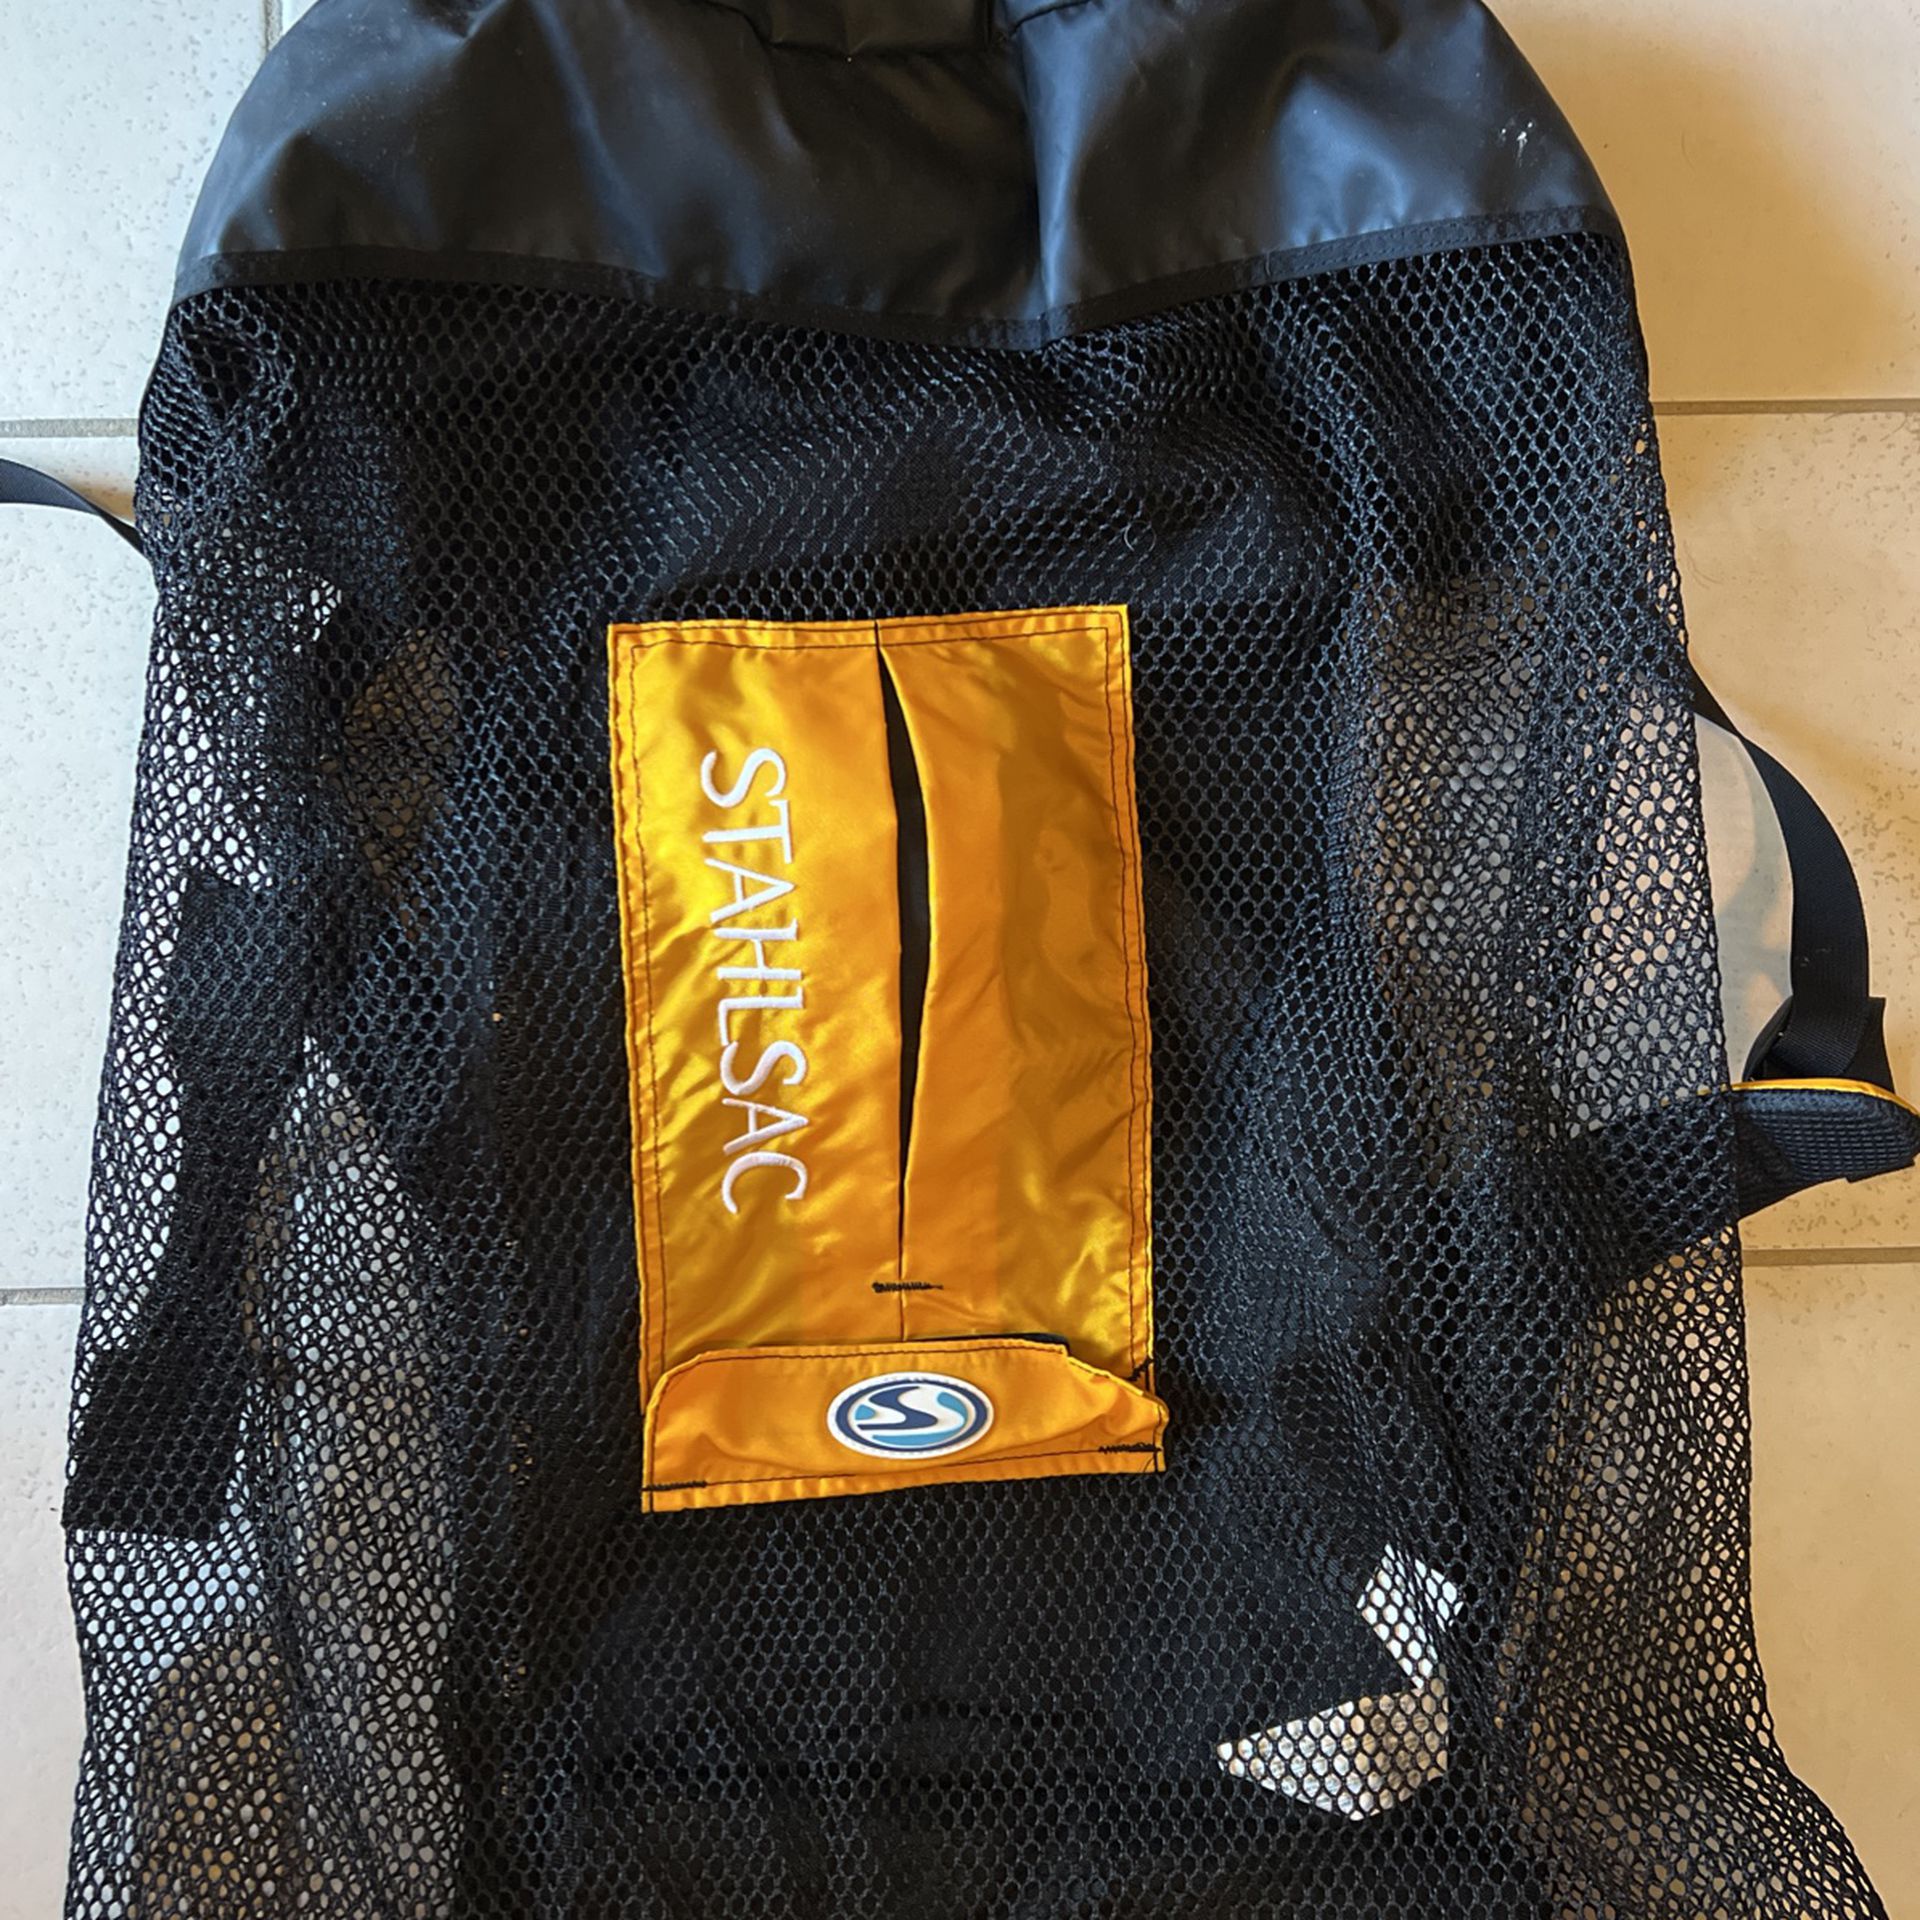 Stahlsac Bonaire Mesh Backpack Dive Bag